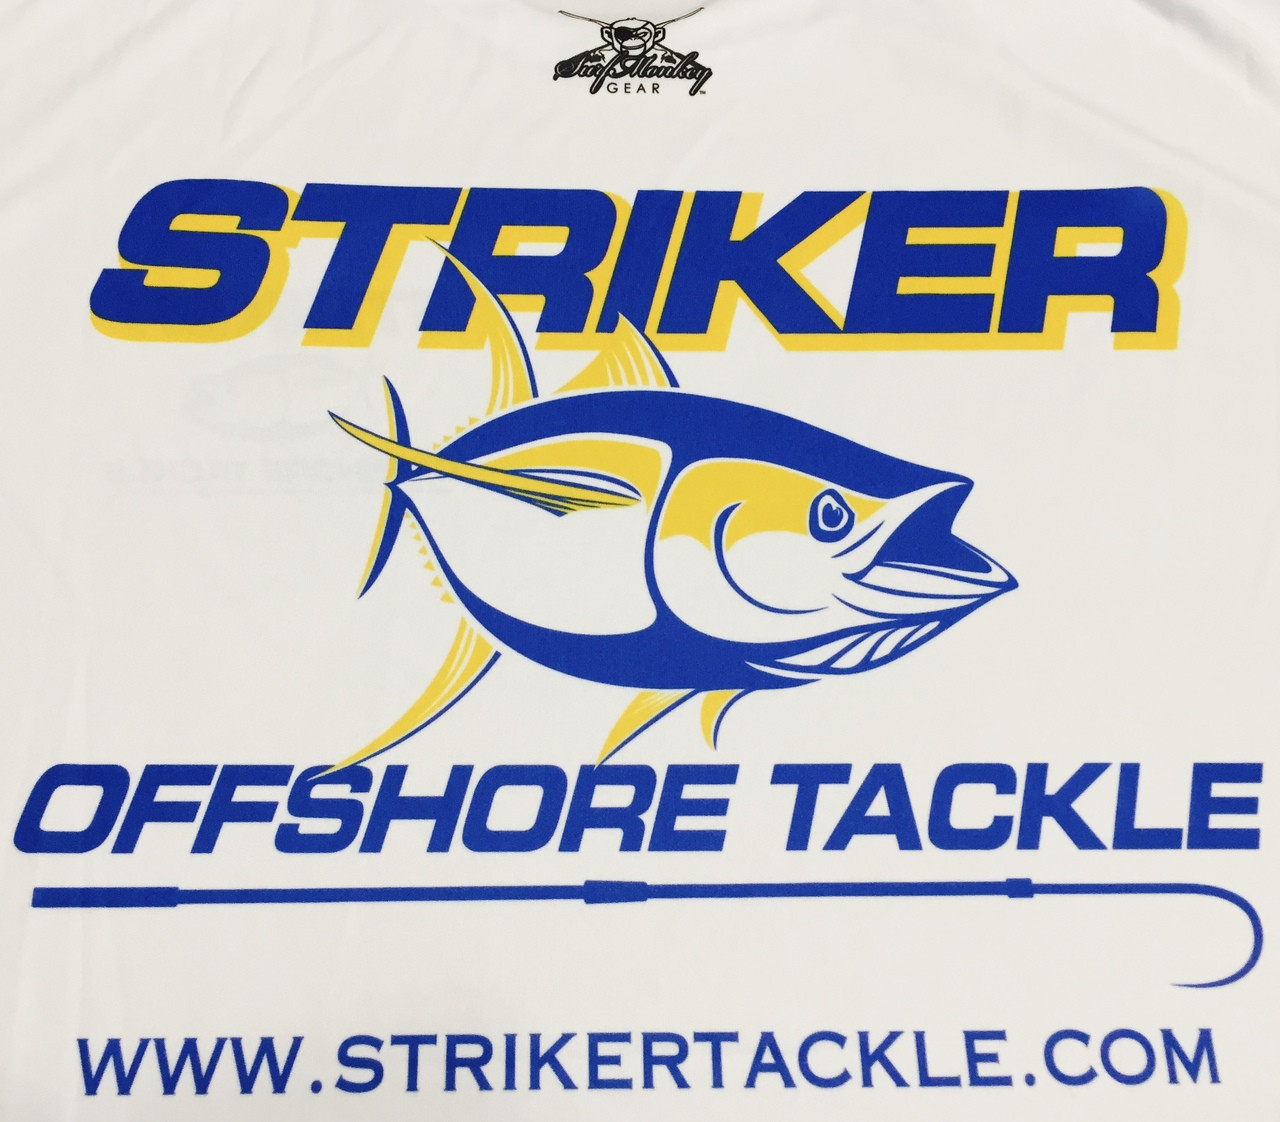 Striker Tackle High Performance Fishing Shirts. - Striker Offshore